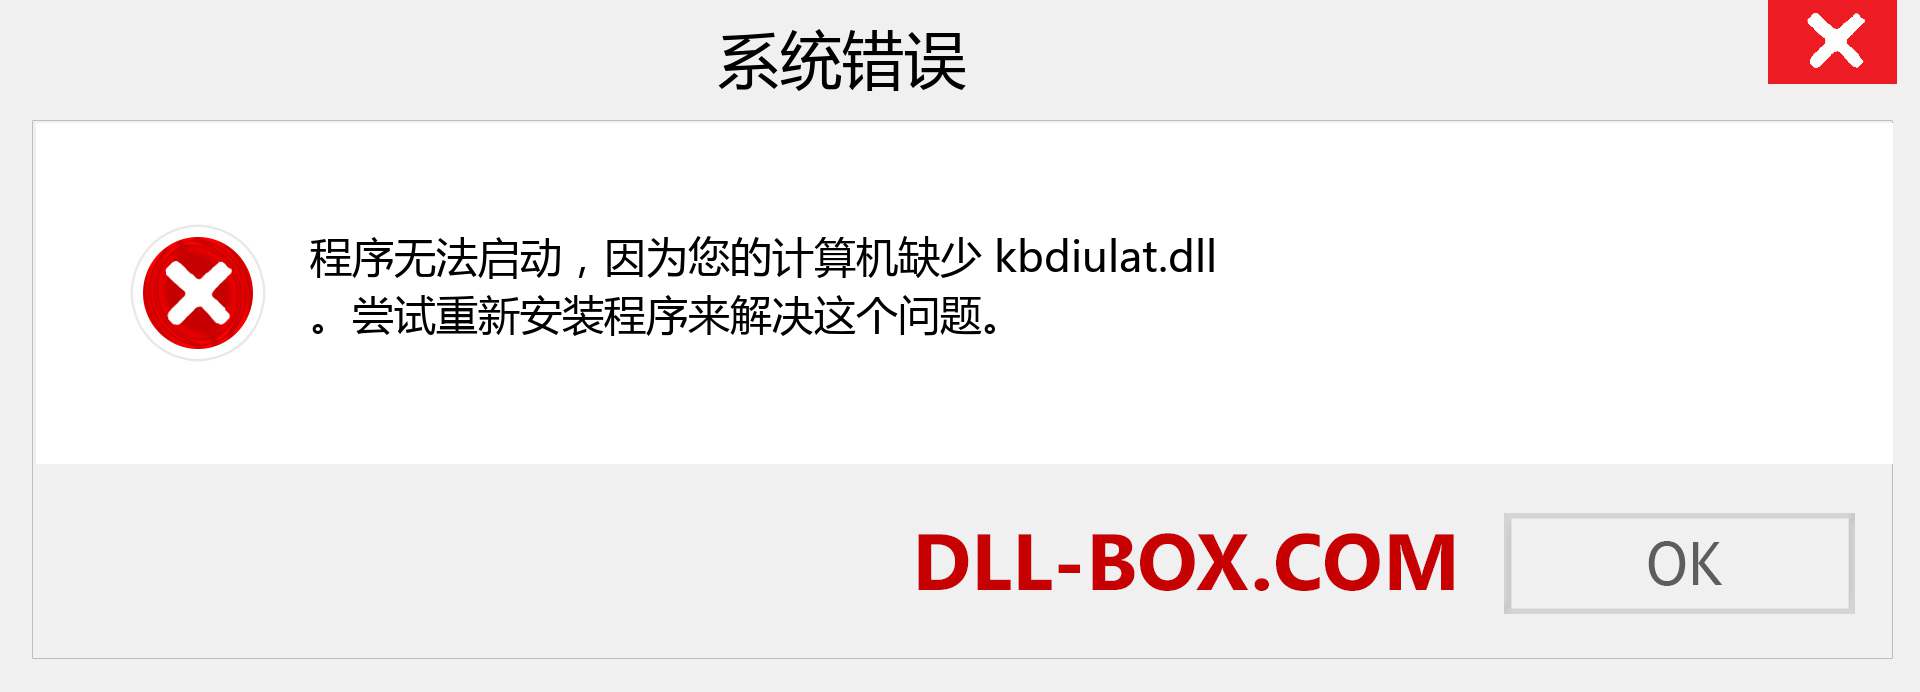 kbdiulat.dll 文件丢失？。 适用于 Windows 7、8、10 的下载 - 修复 Windows、照片、图像上的 kbdiulat dll 丢失错误